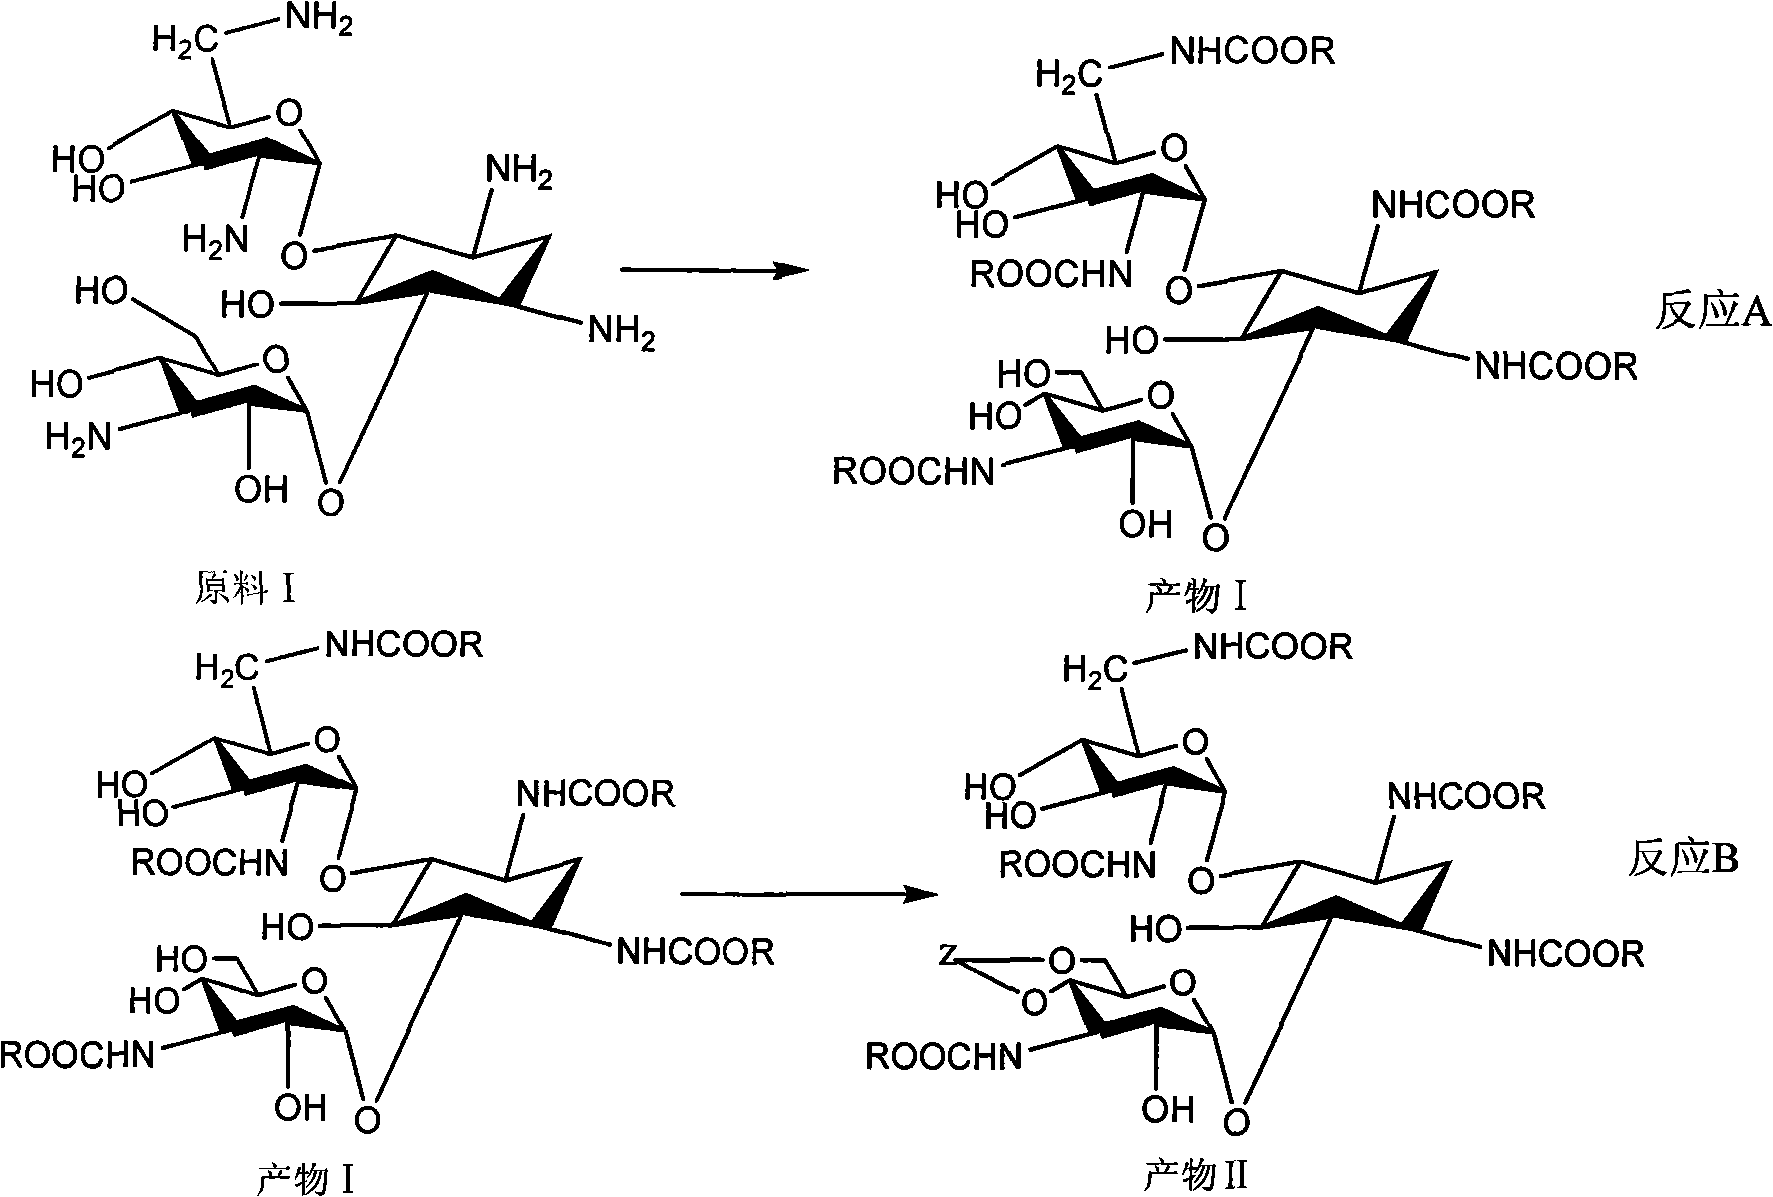 Method for synthesizing Arbekacin and intermediate dibekacin thereof